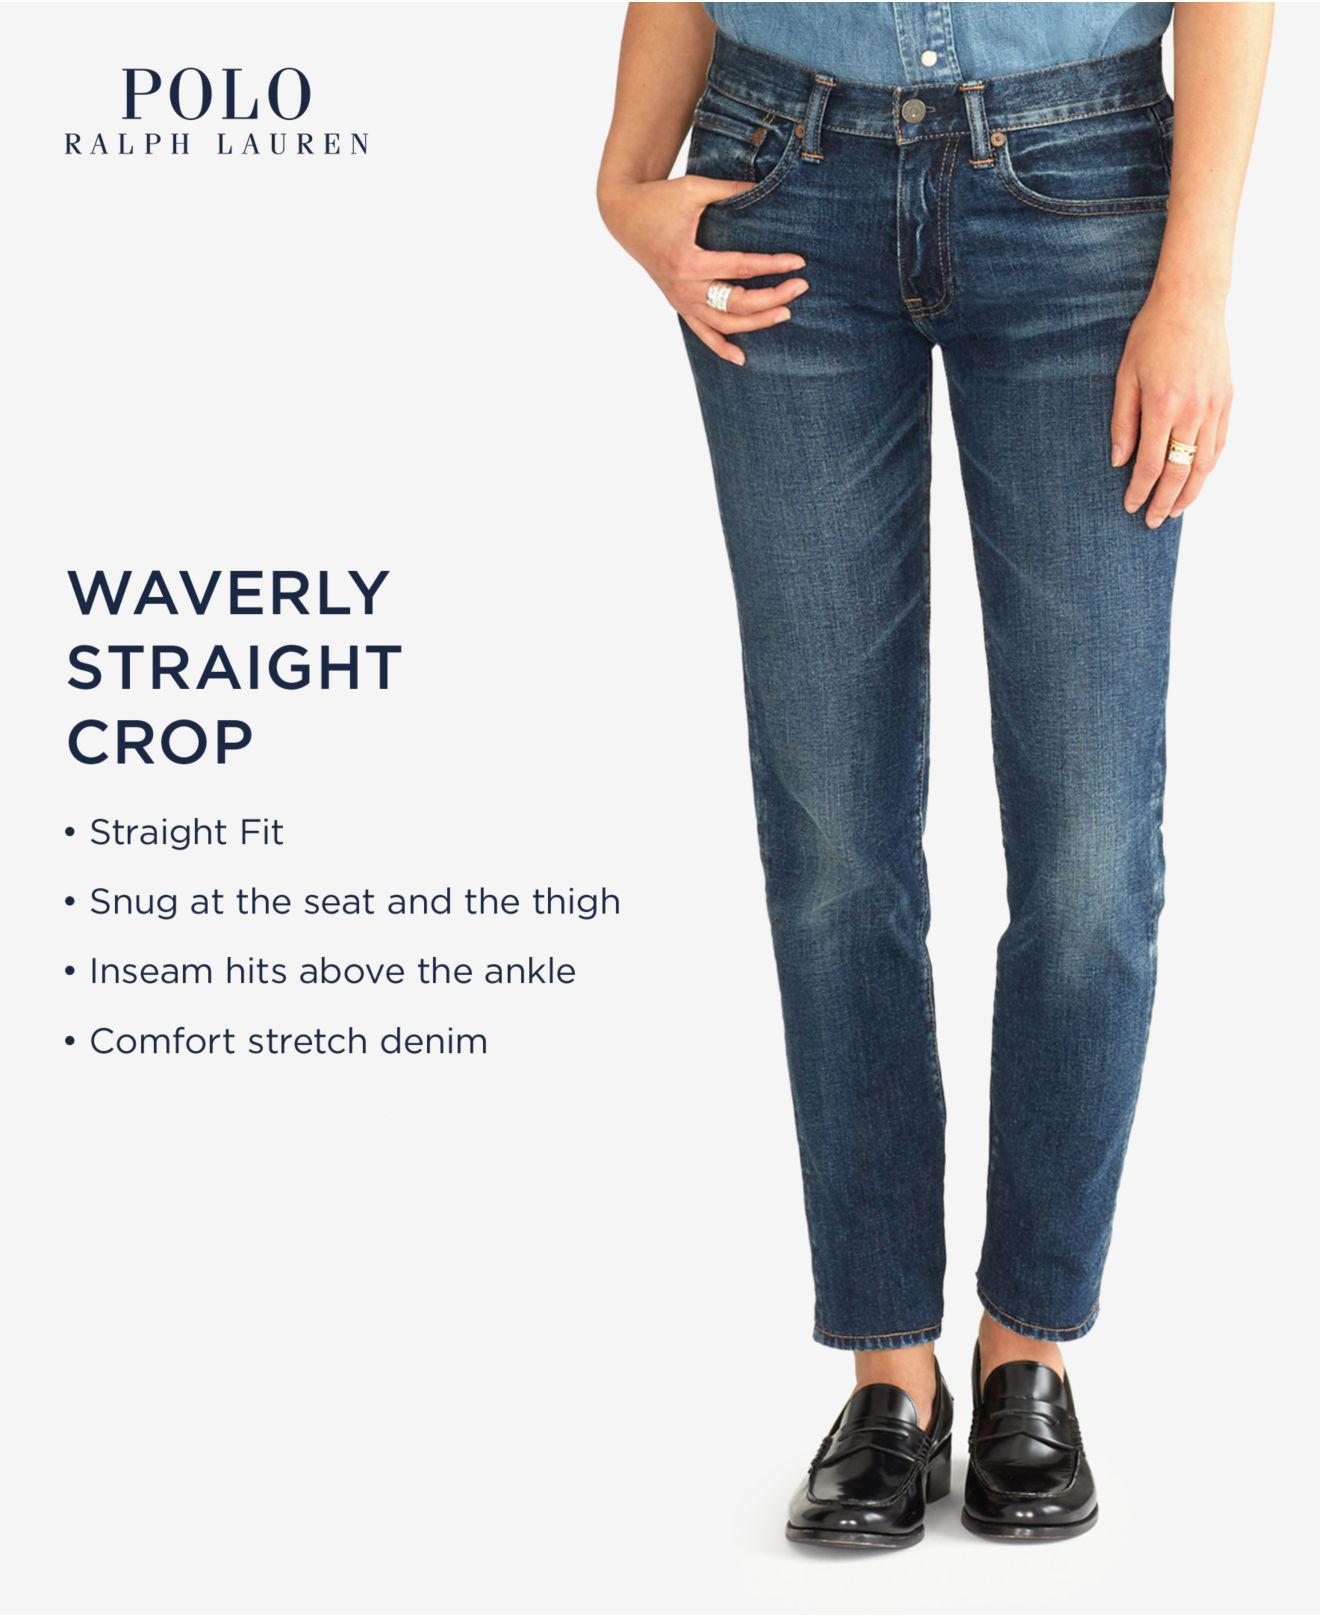 polo ralph lauren waverly straight crop jean